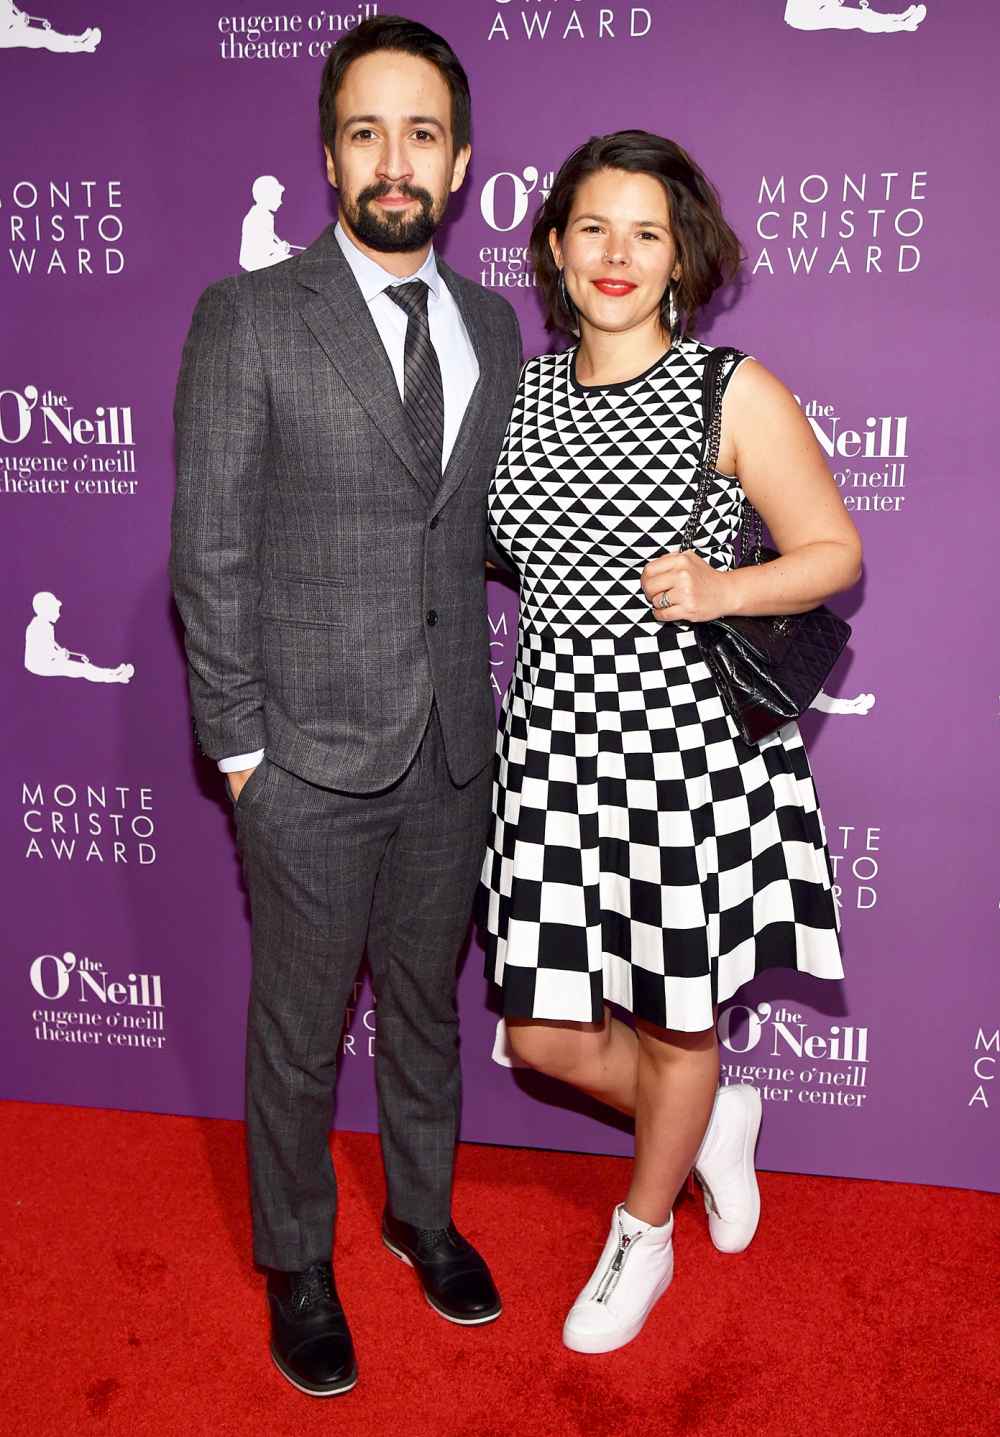 Lin-Manuel Miranda and Vanessa Nadal attend The Eugene O'Neill Theater Center's 18th Annual Monte Cristo Award at Edison Ballroom on April 30, 2018 in New York City.